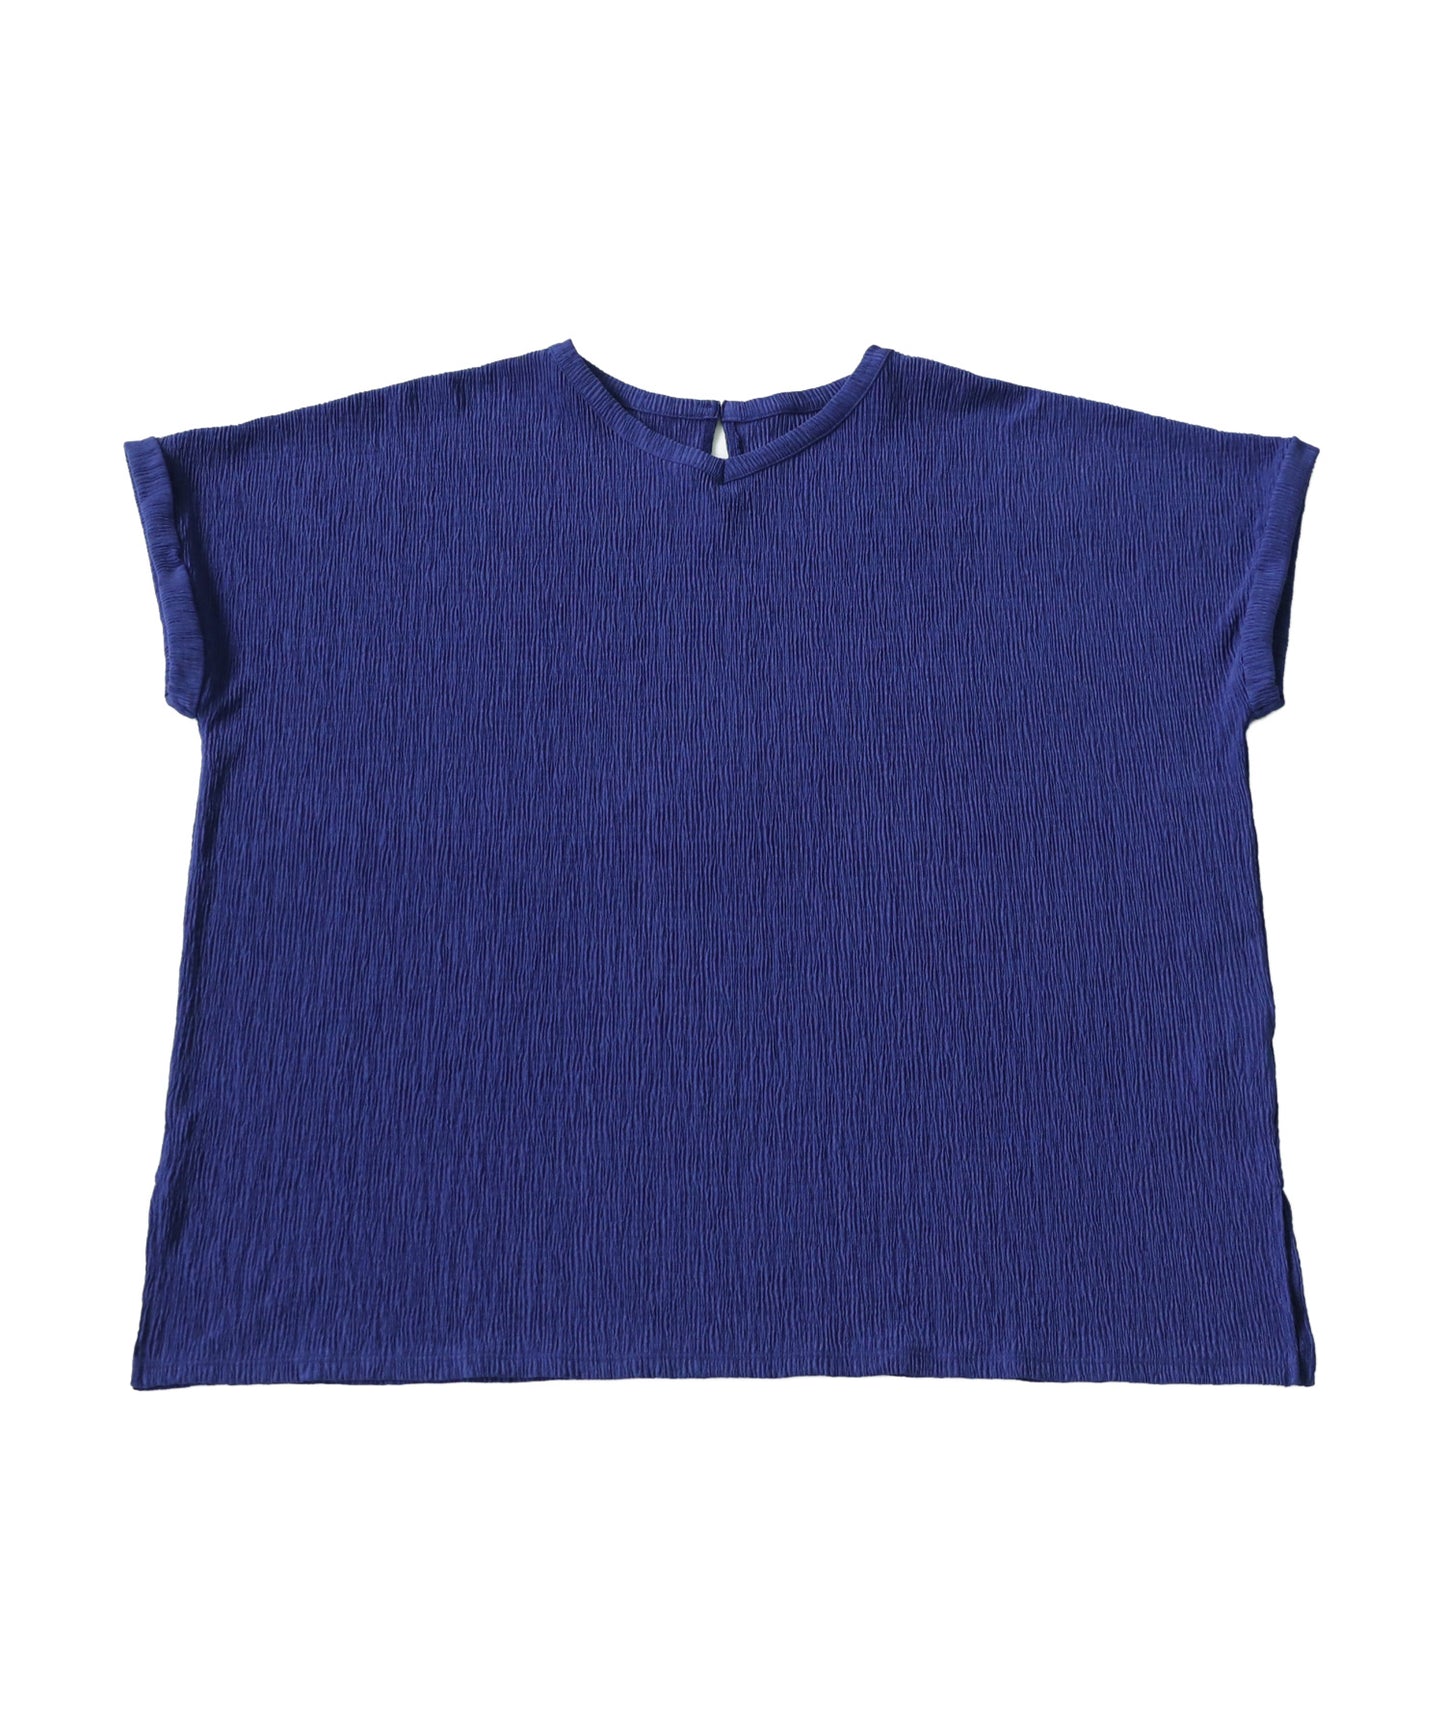 Crepe Ladies Shirt Short-Sleeve plain